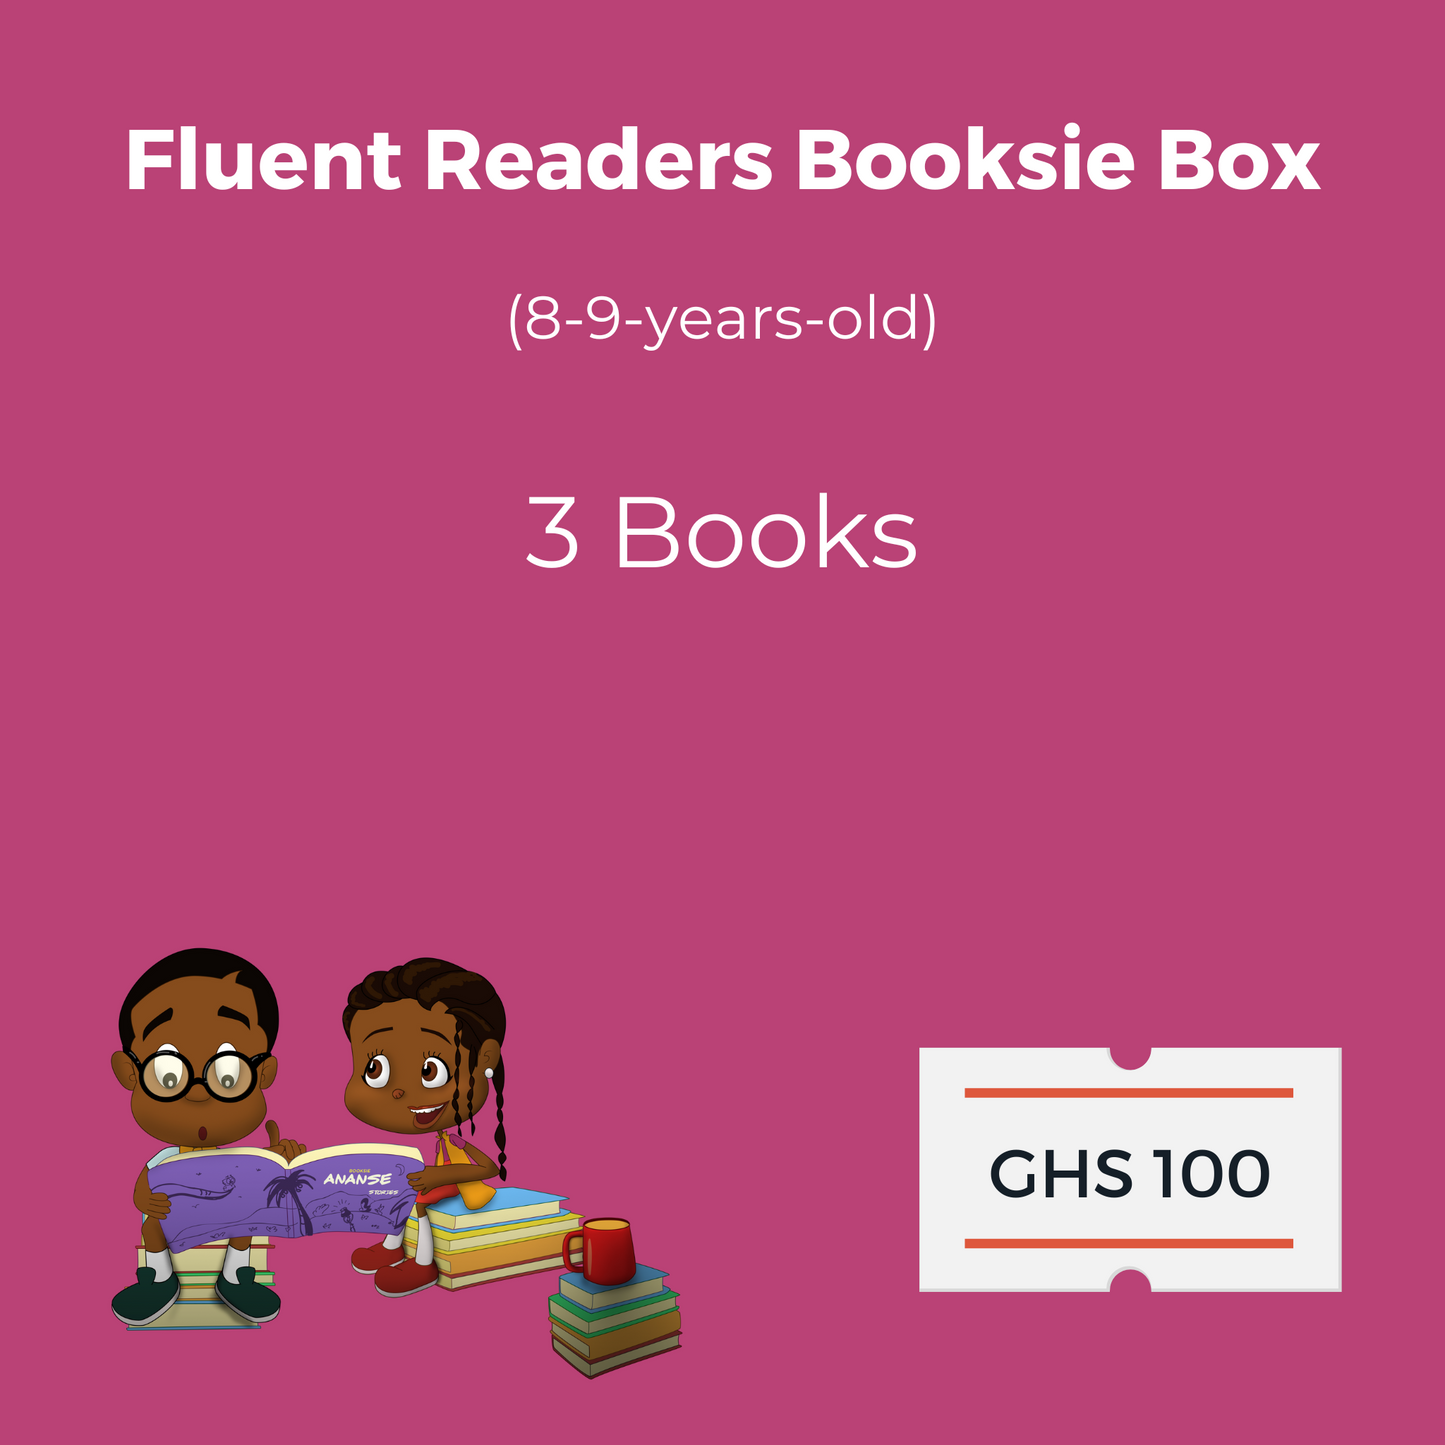 Fluent Readers Booksie Box